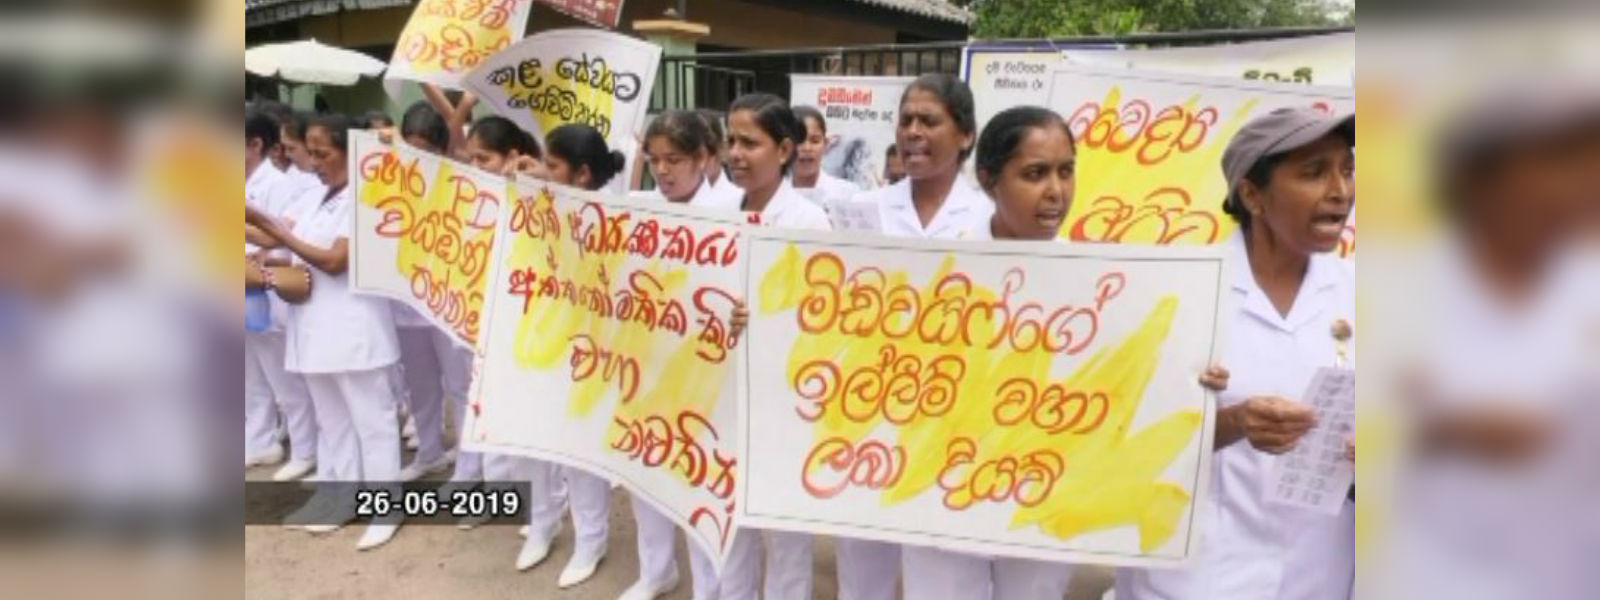 Family Health Officers strike over allowances